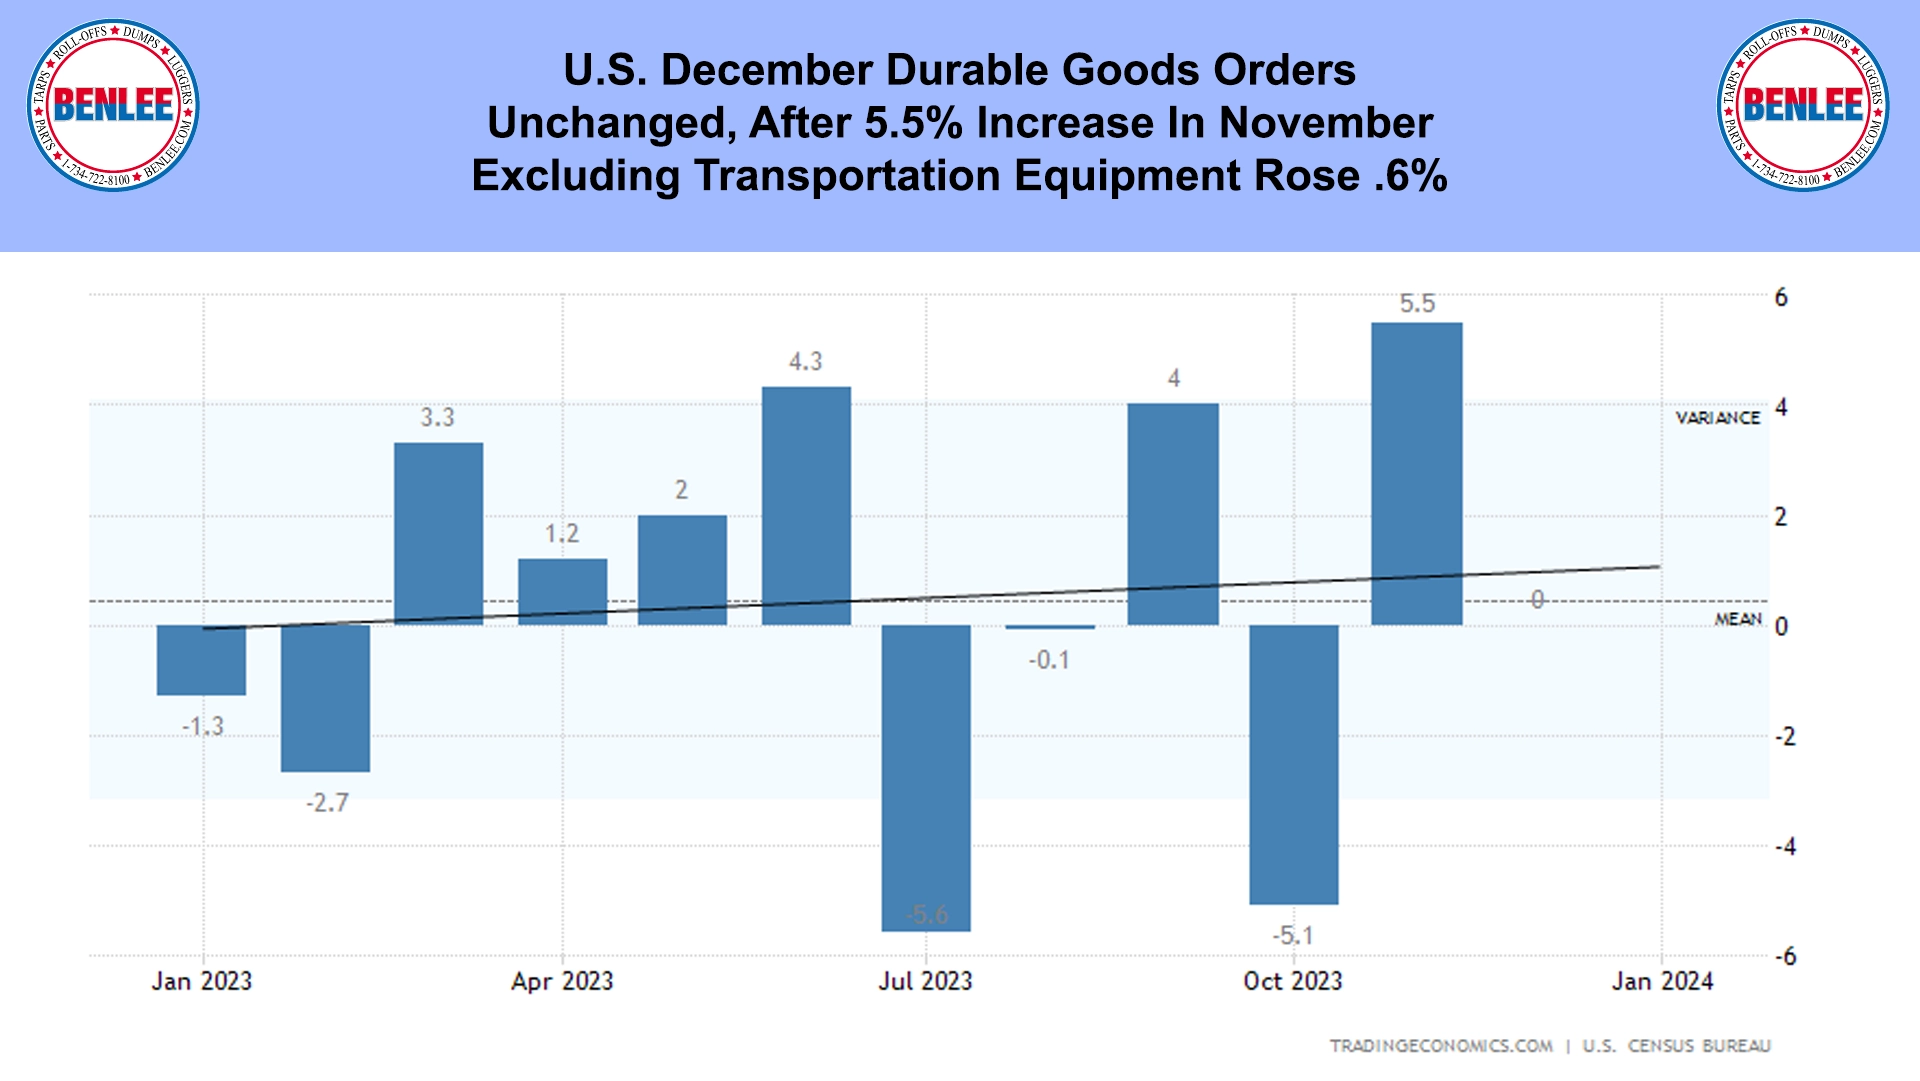 U.S. December Durable Goods Orders